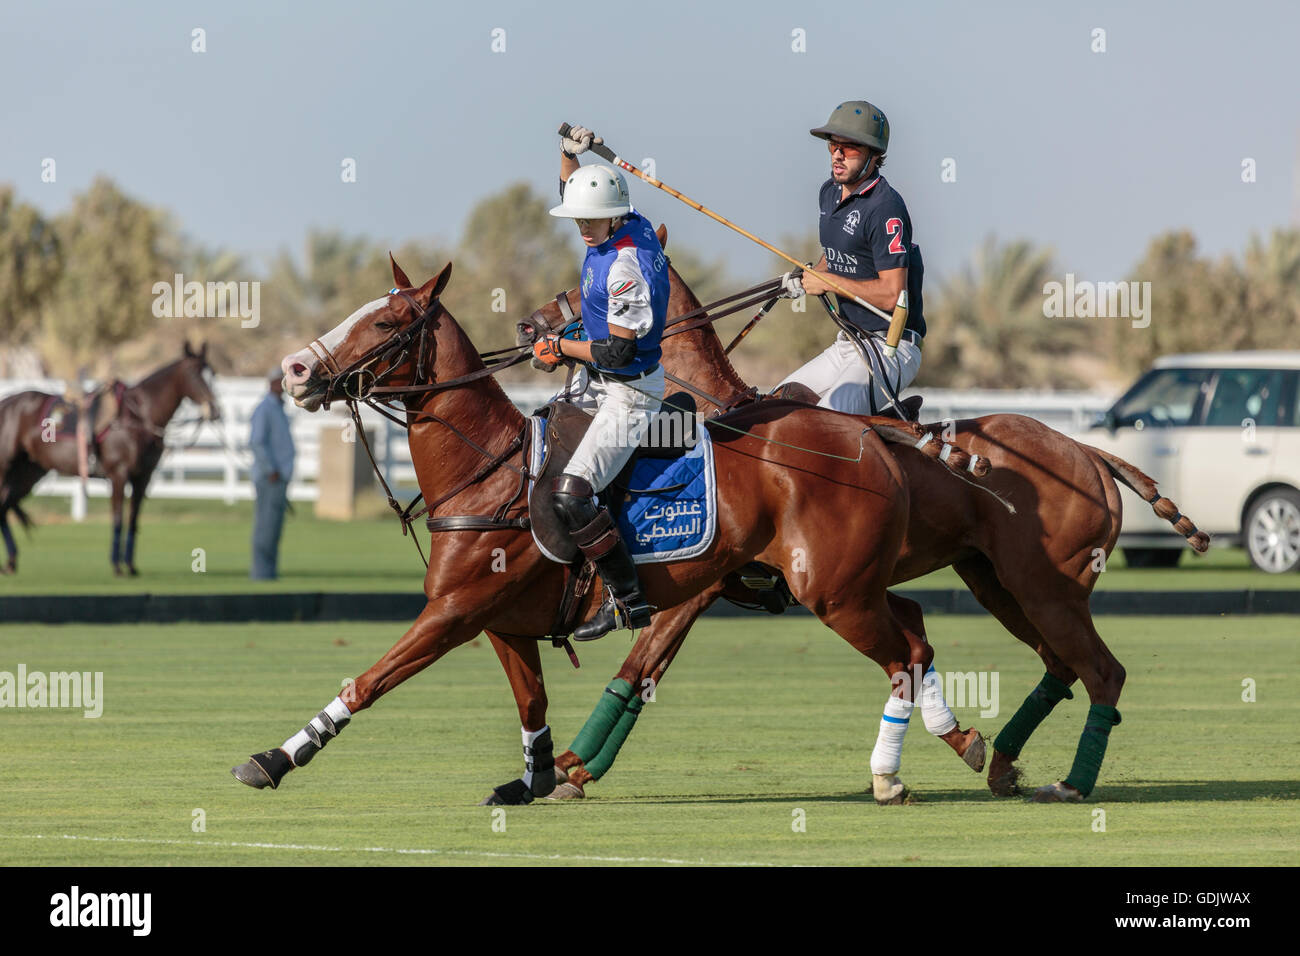 Horsemen riding during the Abu Dhabi Polo Cup event, Abu Dhabi, UAE. Stock Photo